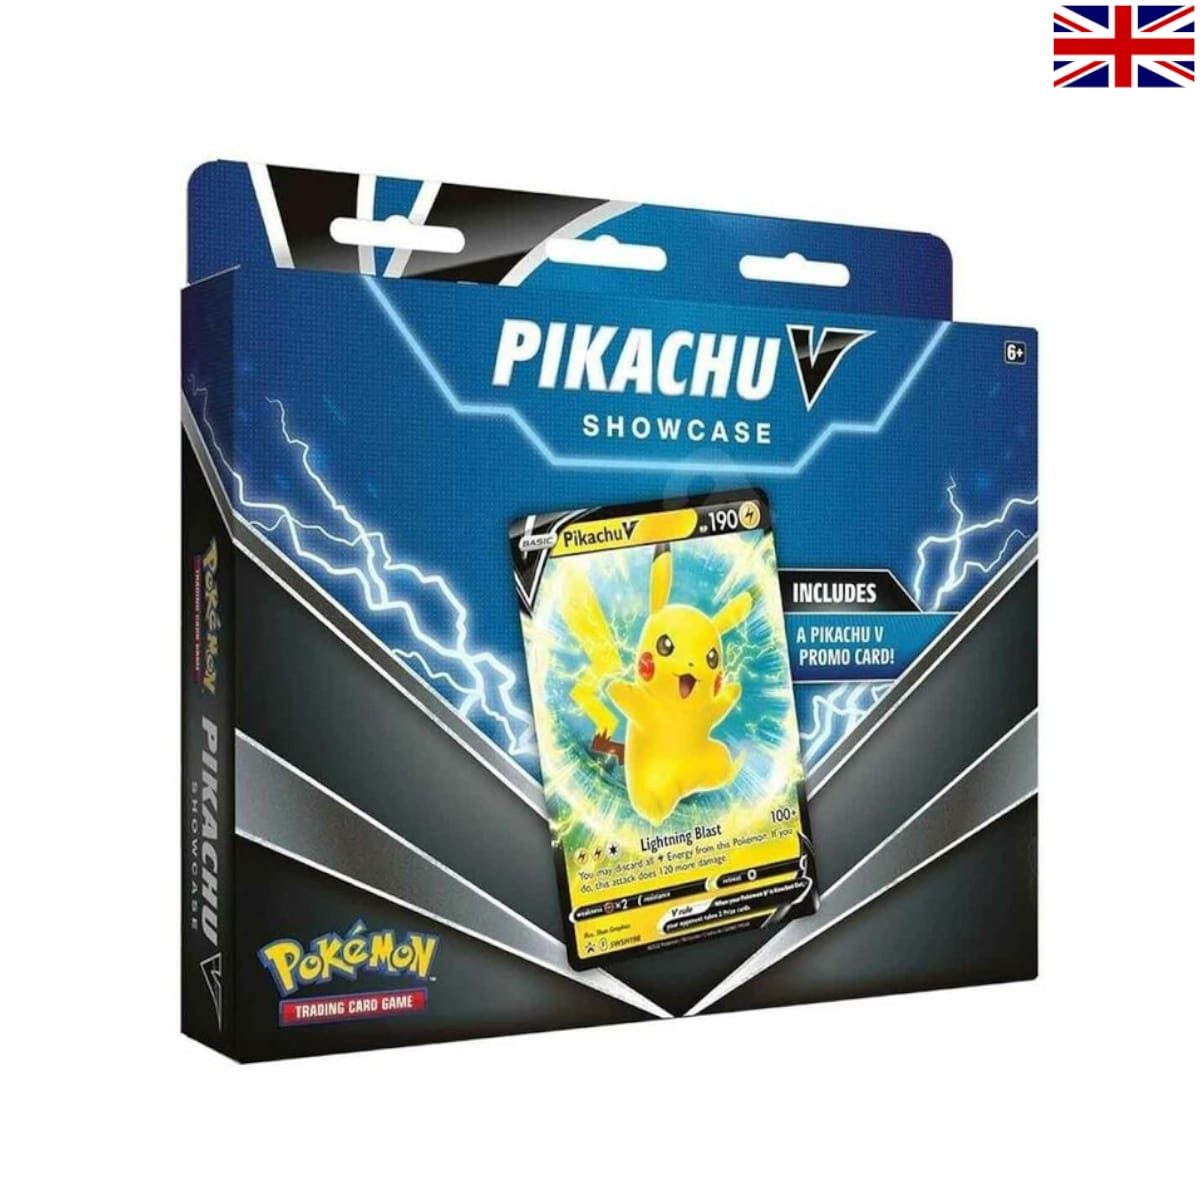 Pokémon - Pikachu V Showcase Box